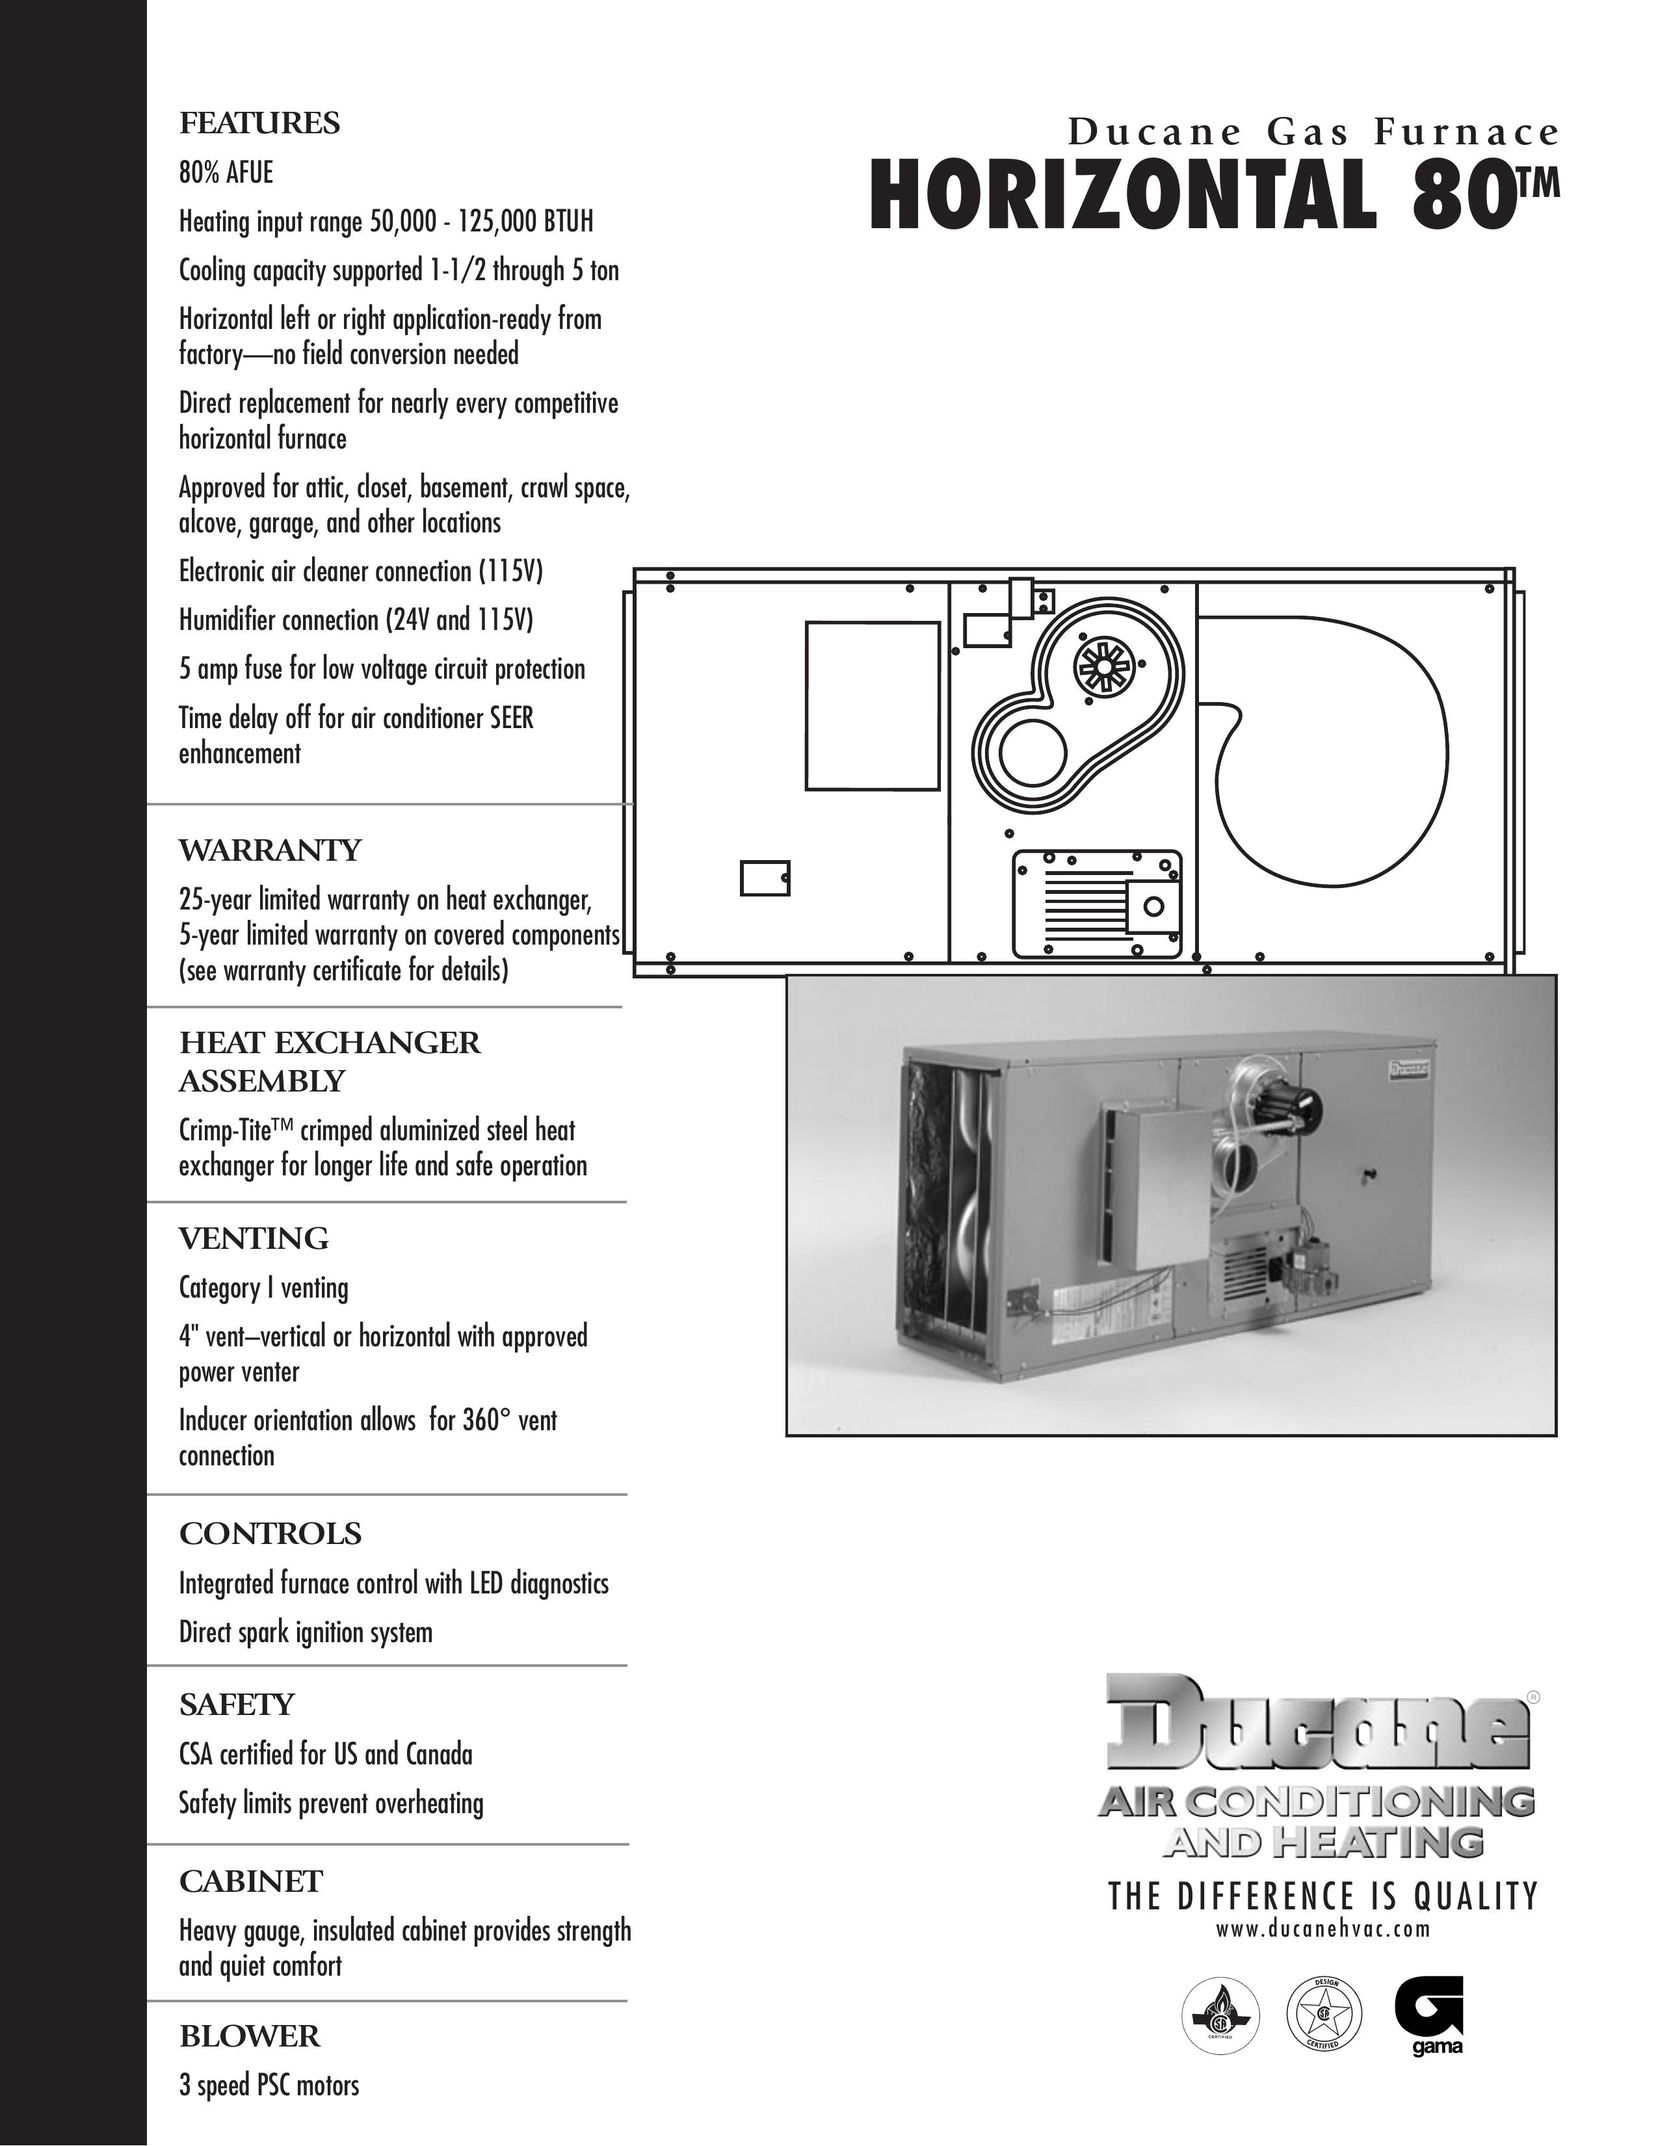 Ducane (HVAC) Horizontal 80 Furnace User Manual